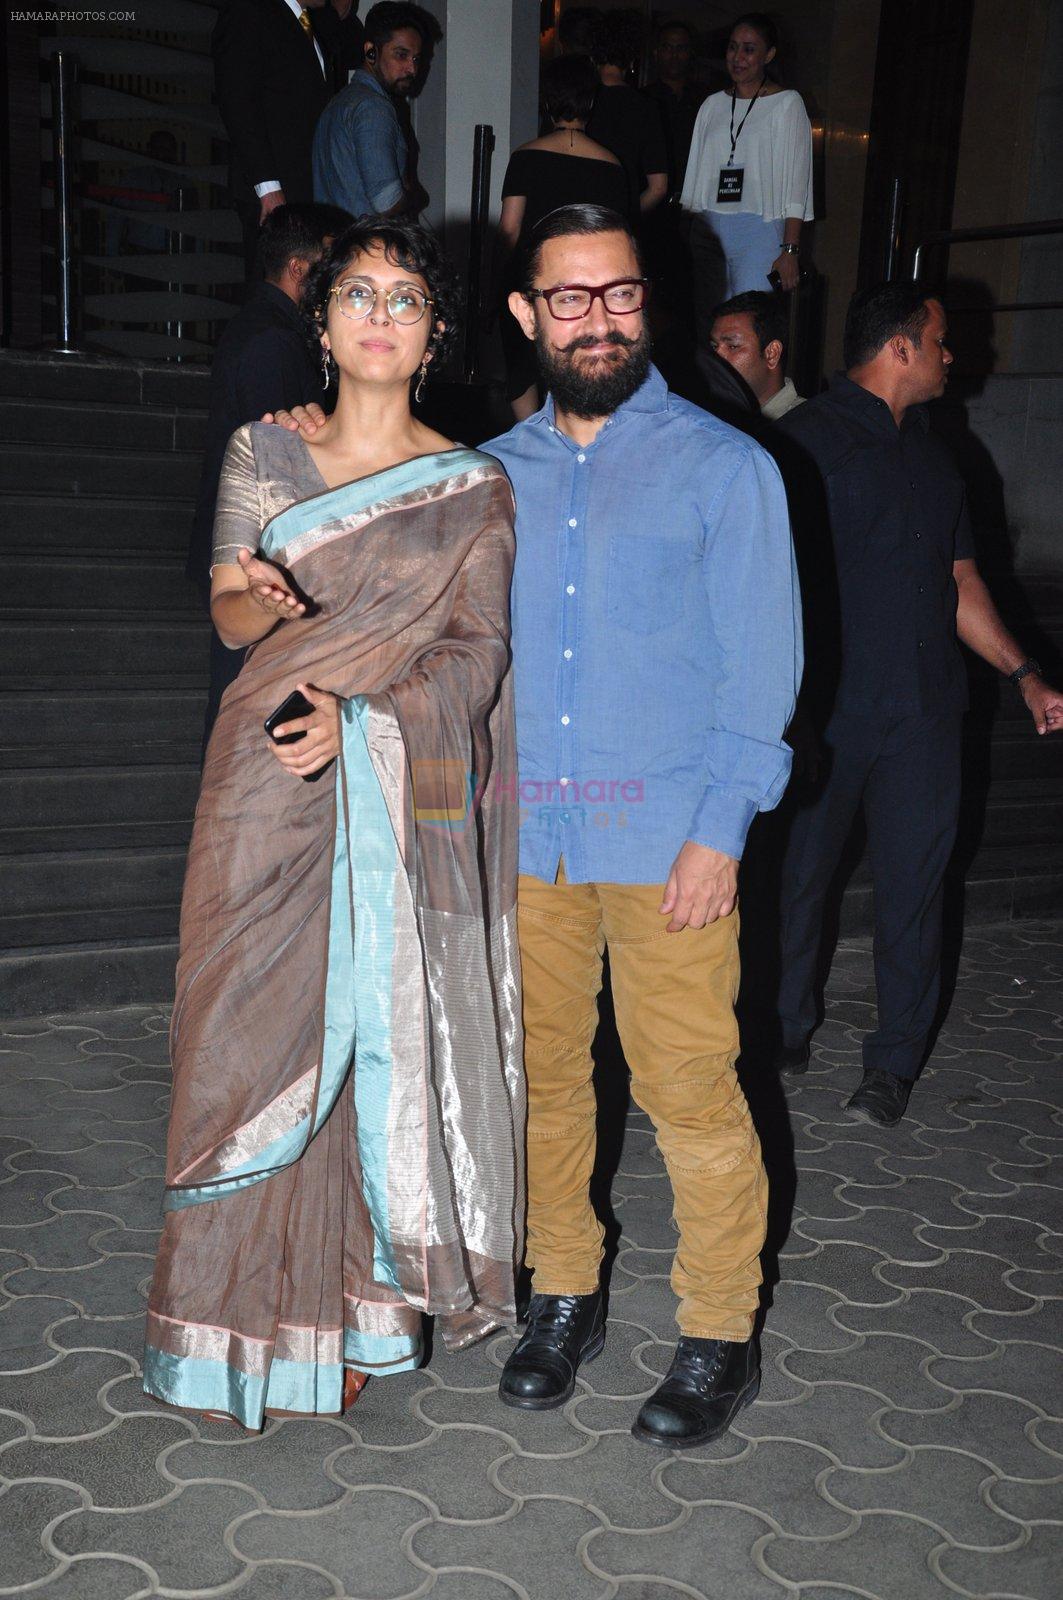 Aamir Khan, Kiran Rao at Dangal premiere on 22nd Dec 2016